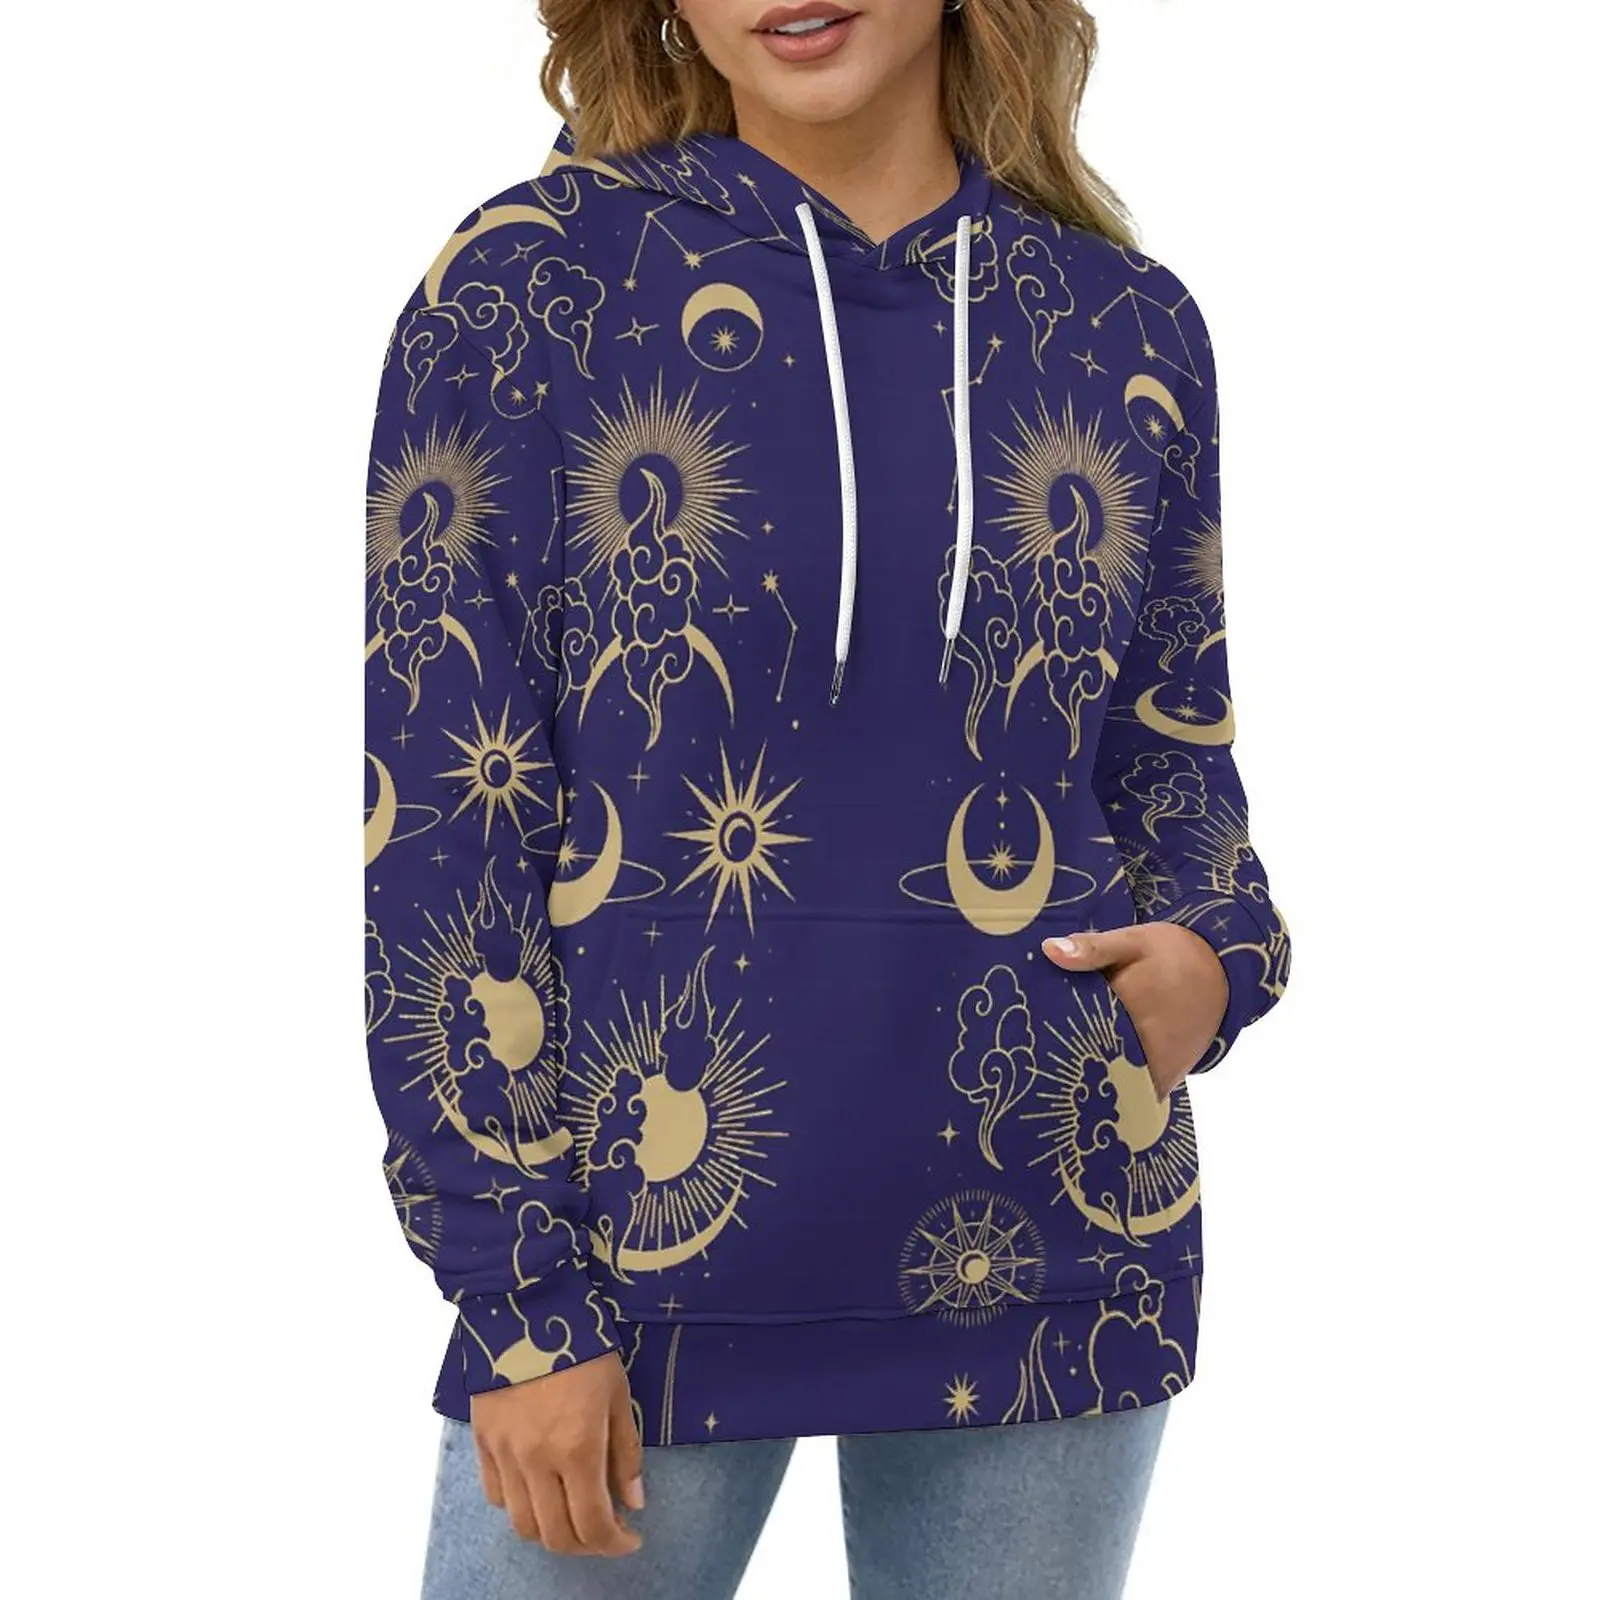 

Retro Astrology Hoodies Unisex Celestial Moon Classic Casual Hoodie Spring Long Sleeve Y2k Design Sweatshirts Large Size